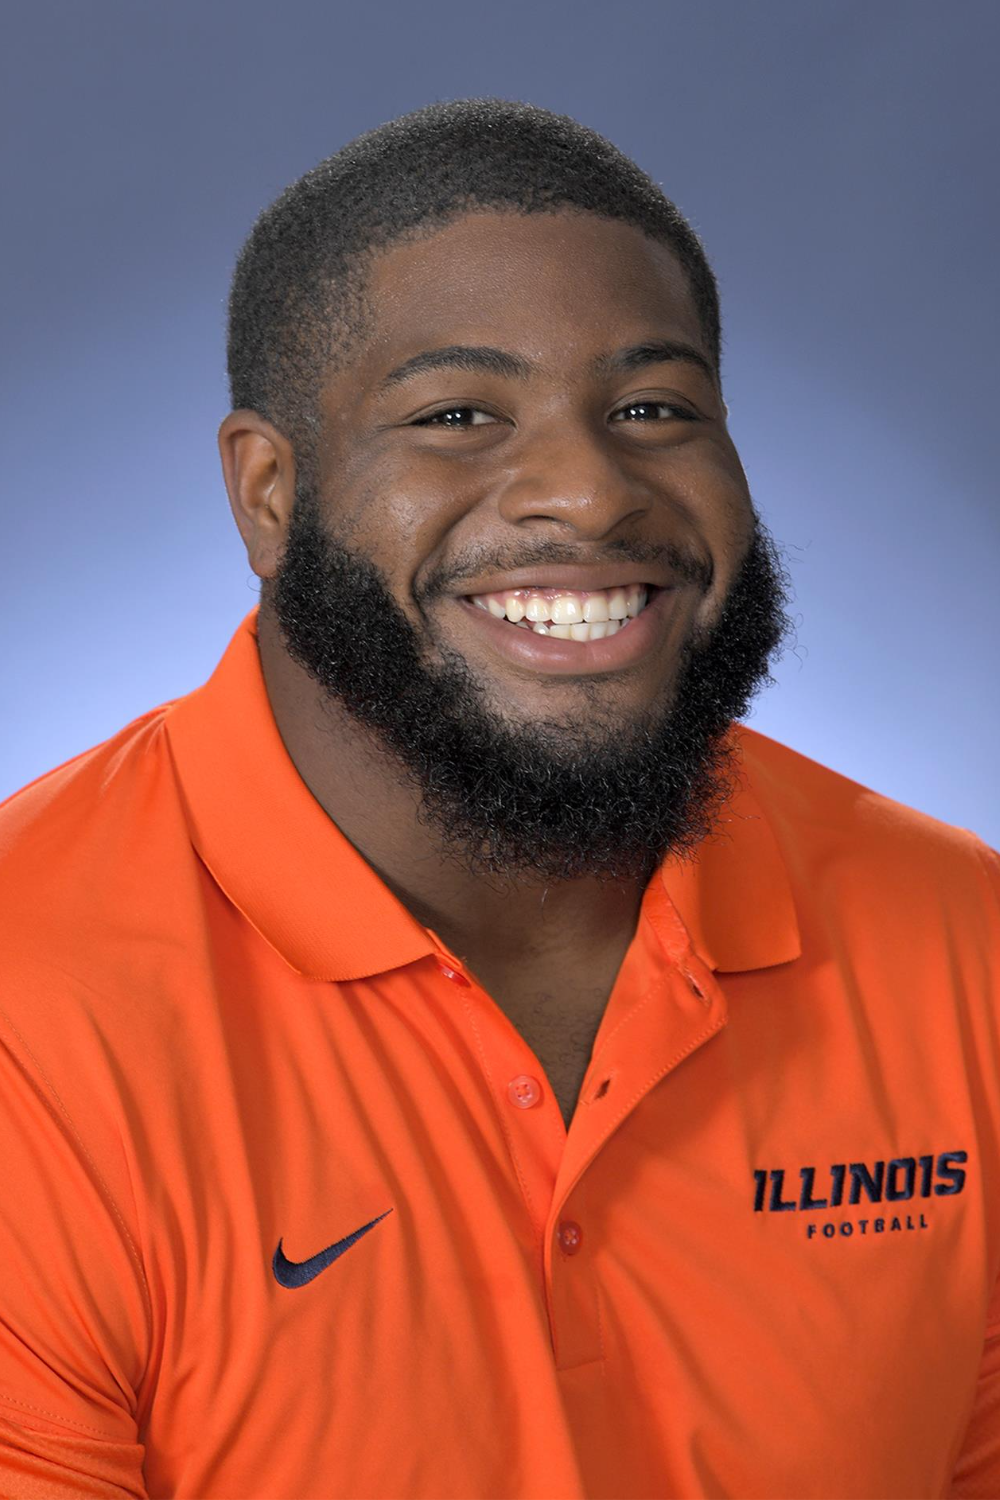 Kenyon Jackson wearing Illinois University Football Jersey